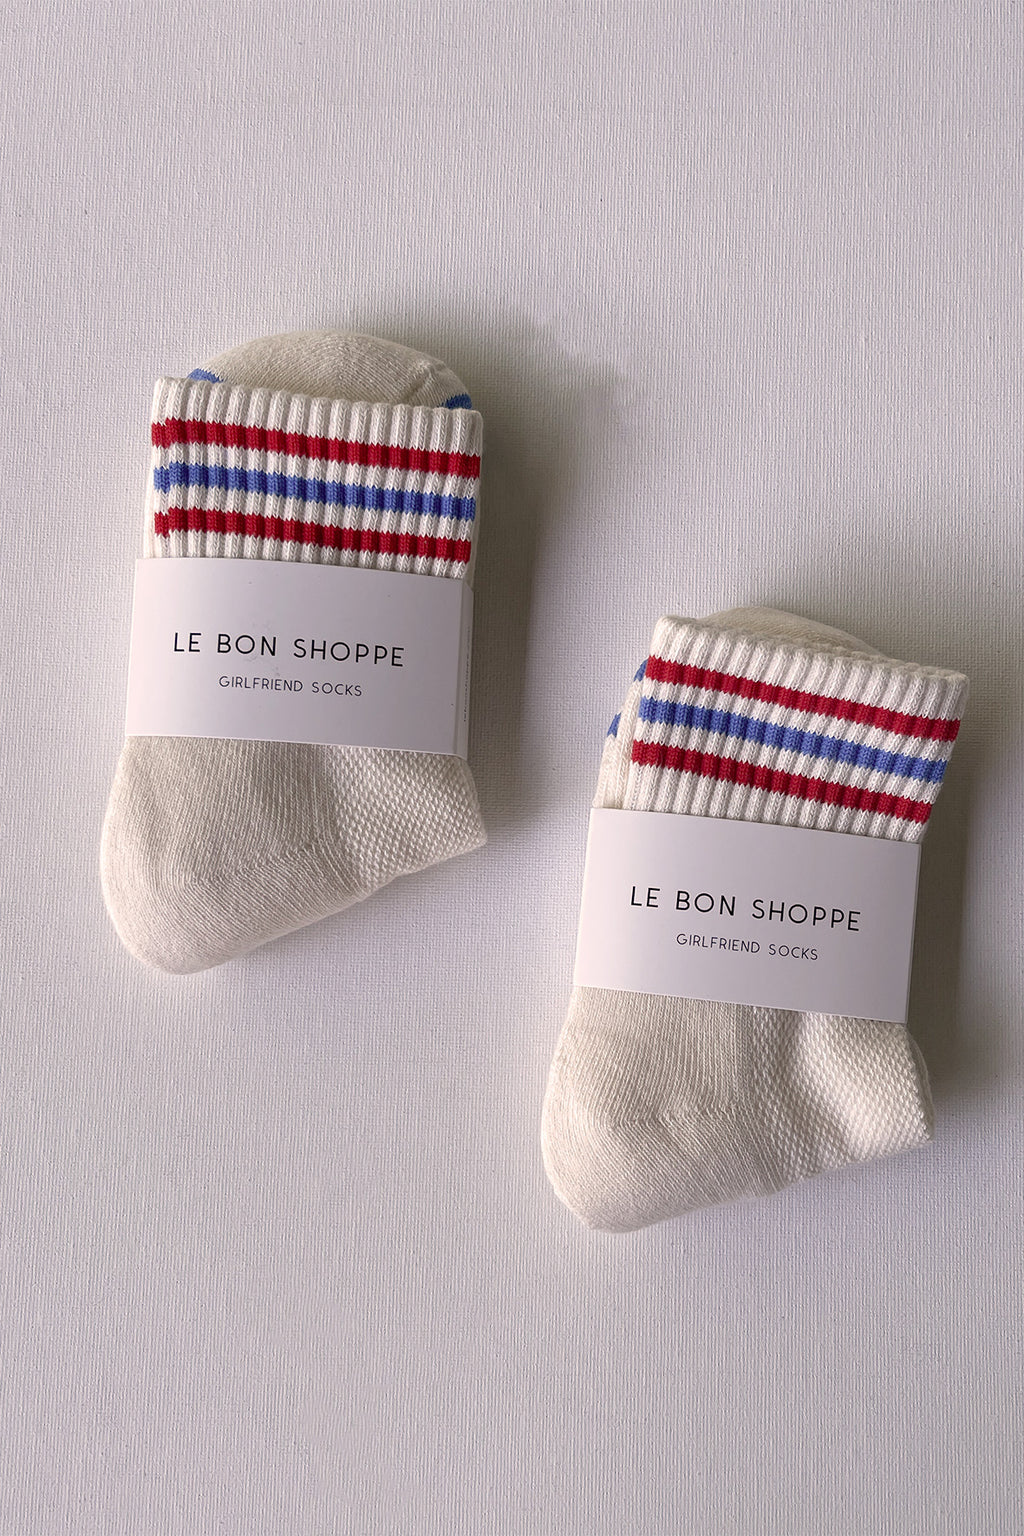 Le Bon Shoppe Girlfriend Socks - Leche